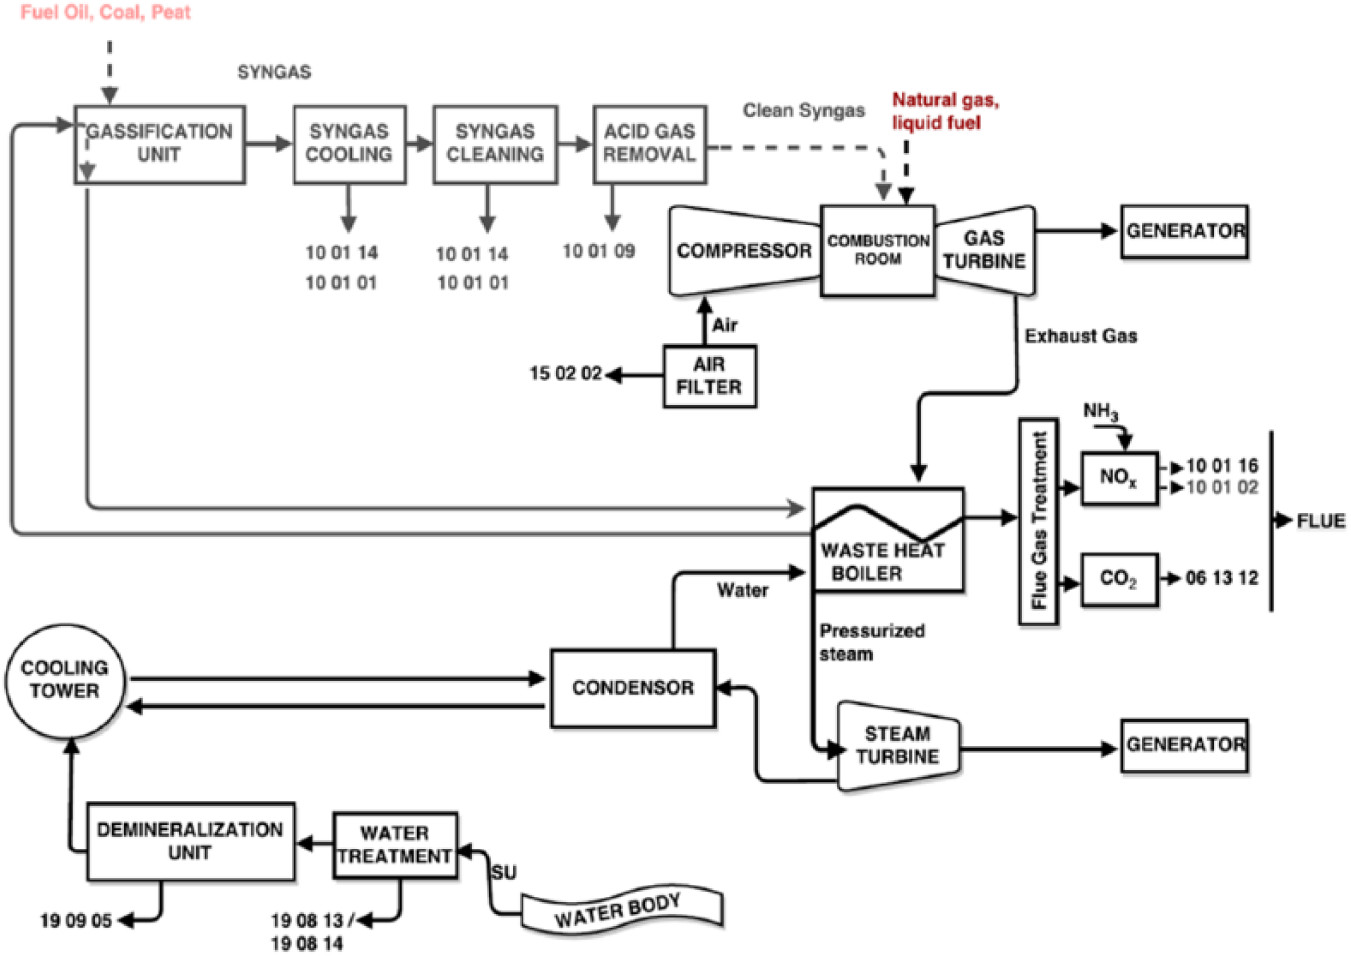 Figure 4: IGCC/combined cycle power plant scheme and waste points (Demir, et al., 2019).